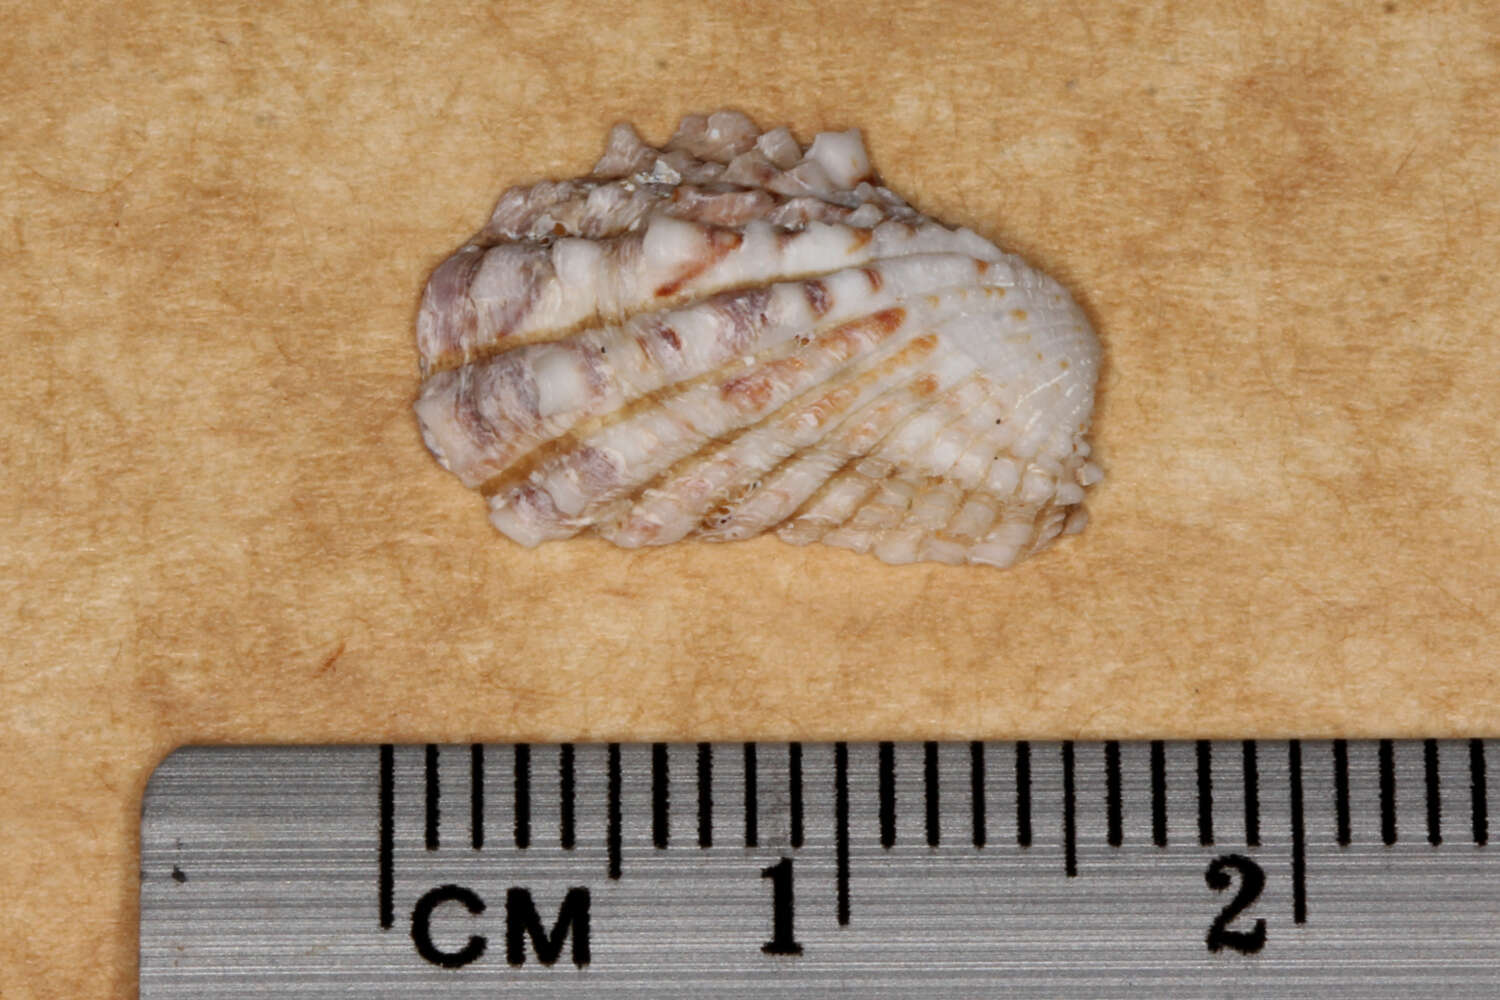 Plancia ëd Cardita aviculina Lamarck 1819